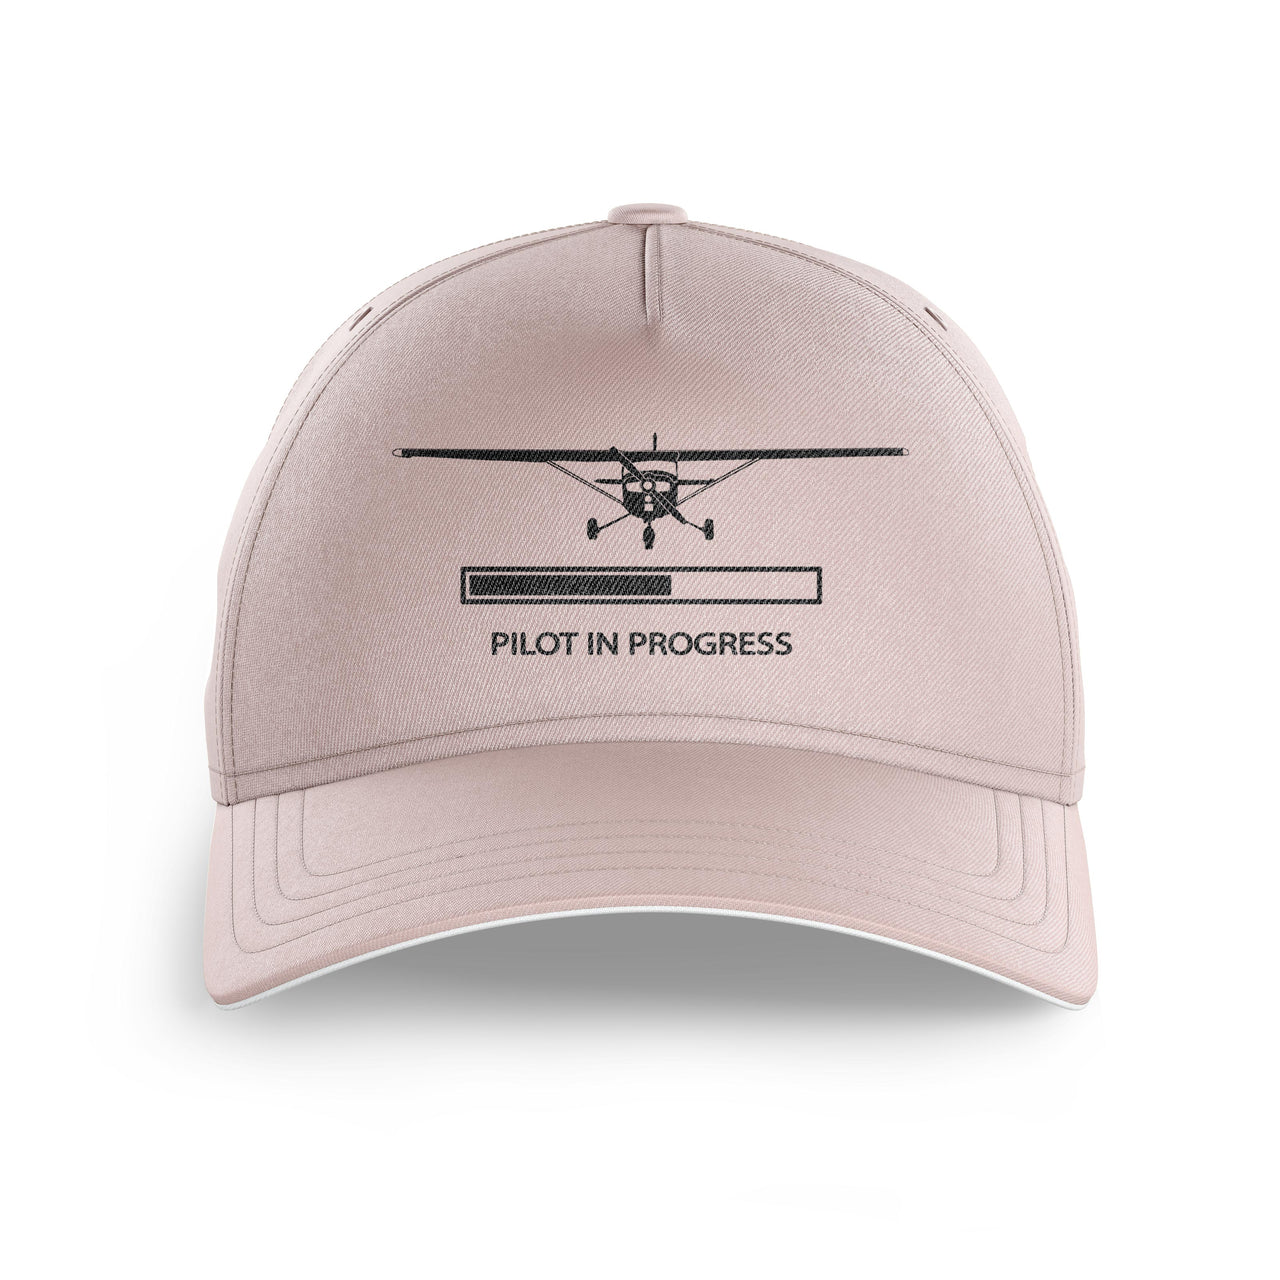 Pilot In Progress (Cessna) Printed Hats